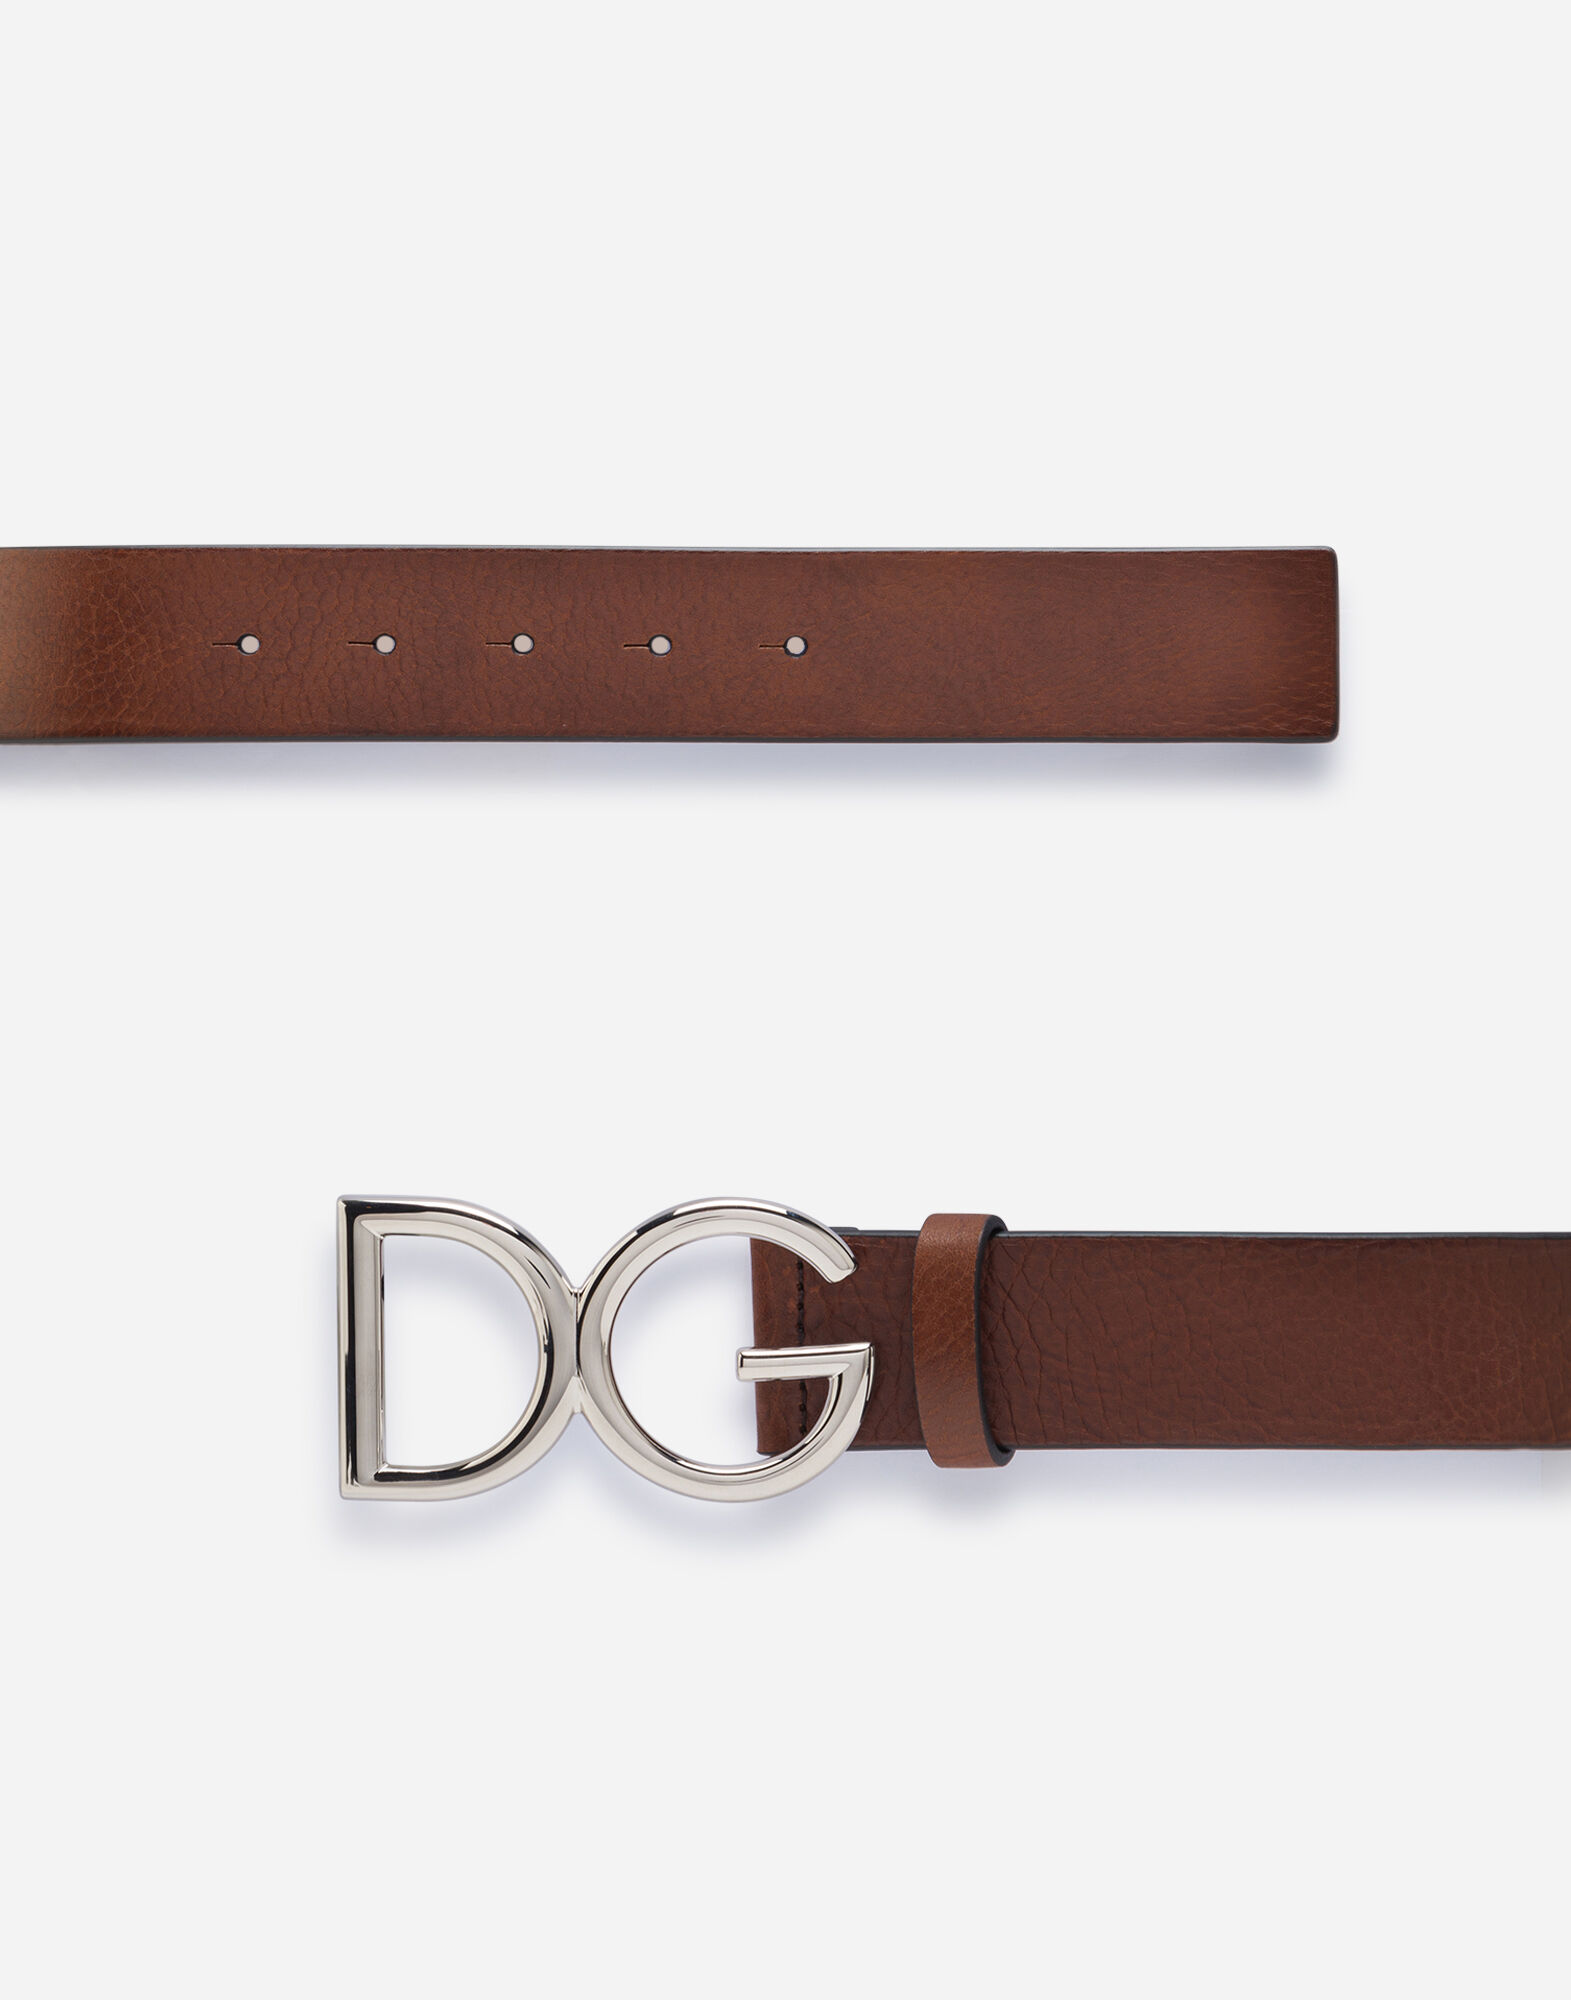 Tumbled leather belt with DG logo